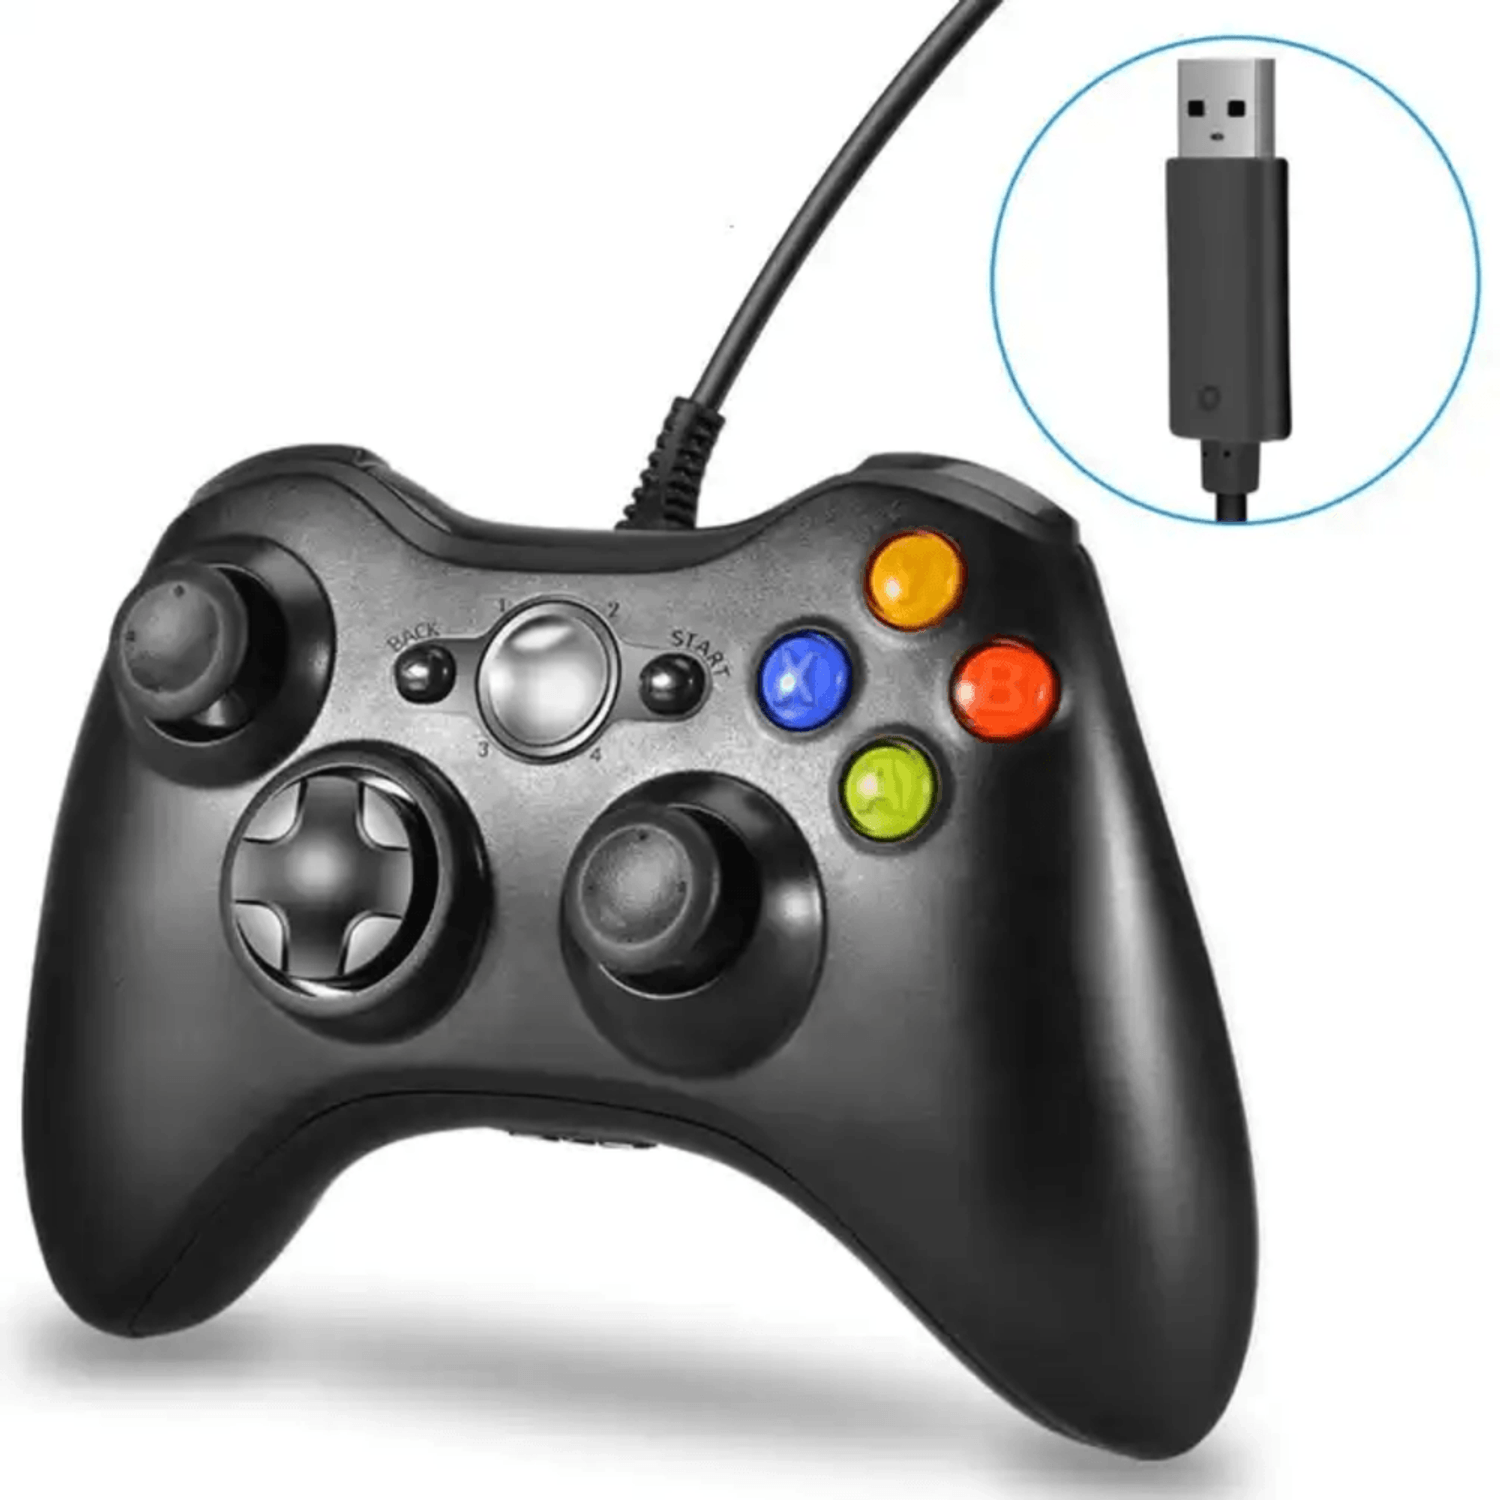 Joystick Para Xbox 360 Con Cable Njx301 - Kingstore